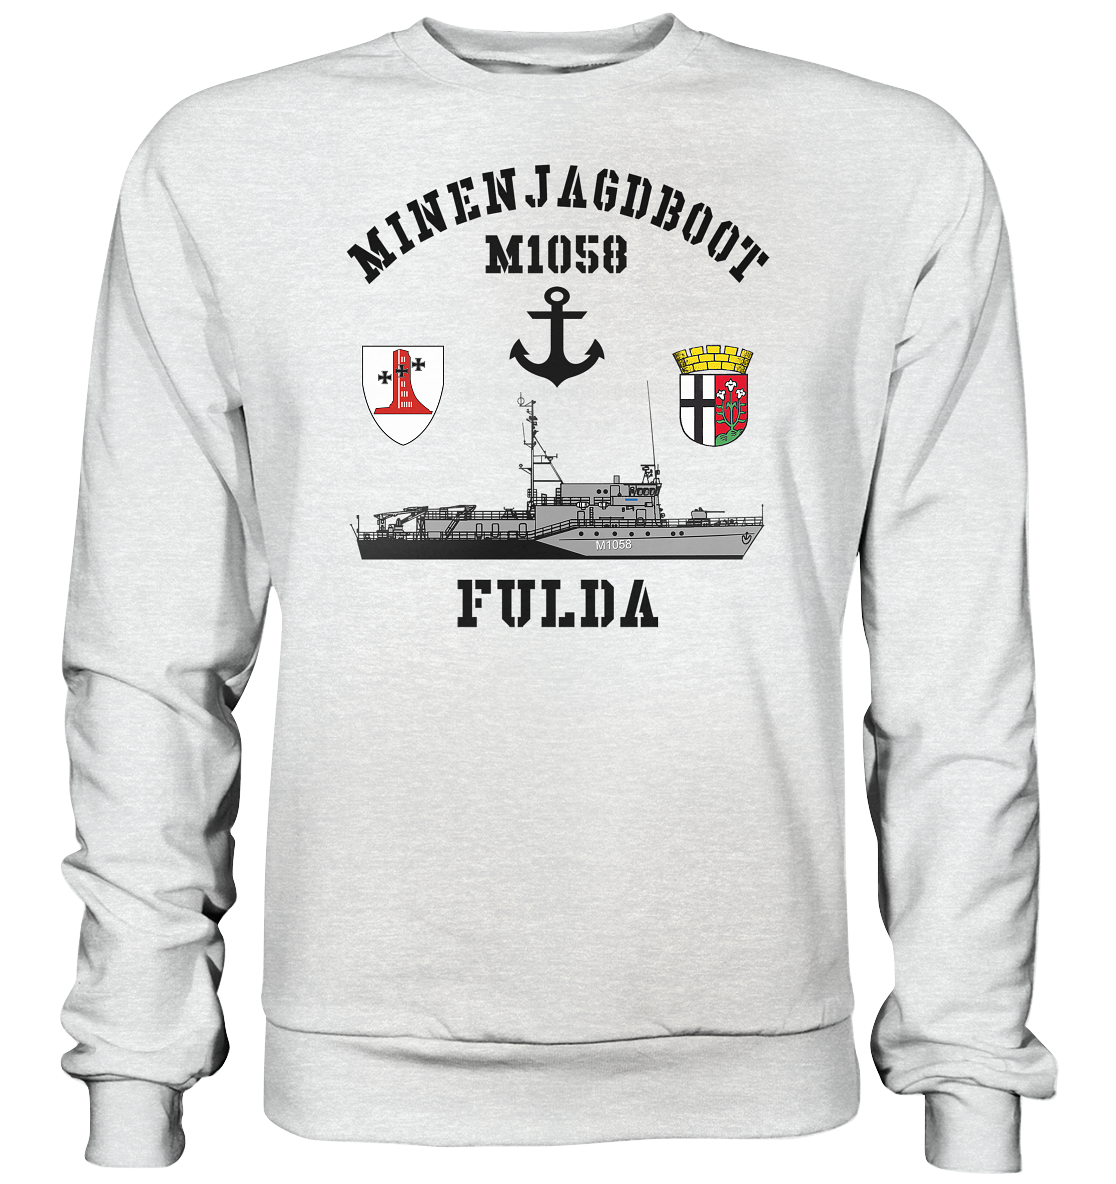 Mij.-Boot M1058 FULDA Anker 1.MSG - Premium Sweatshirt